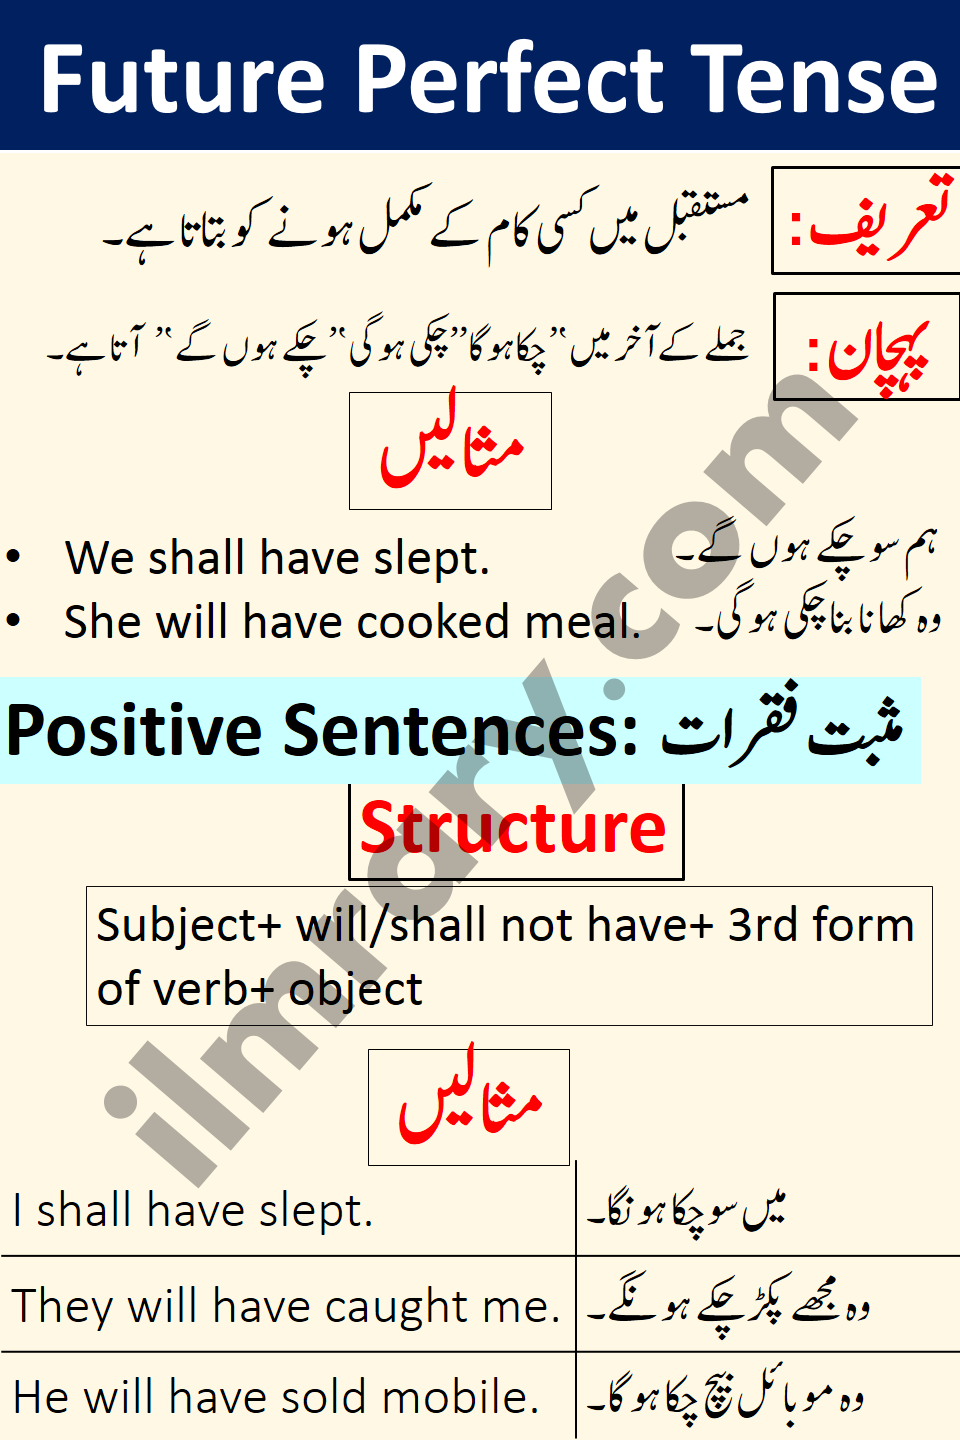 Positive Sentences for Future Perfect Tense in Urdu